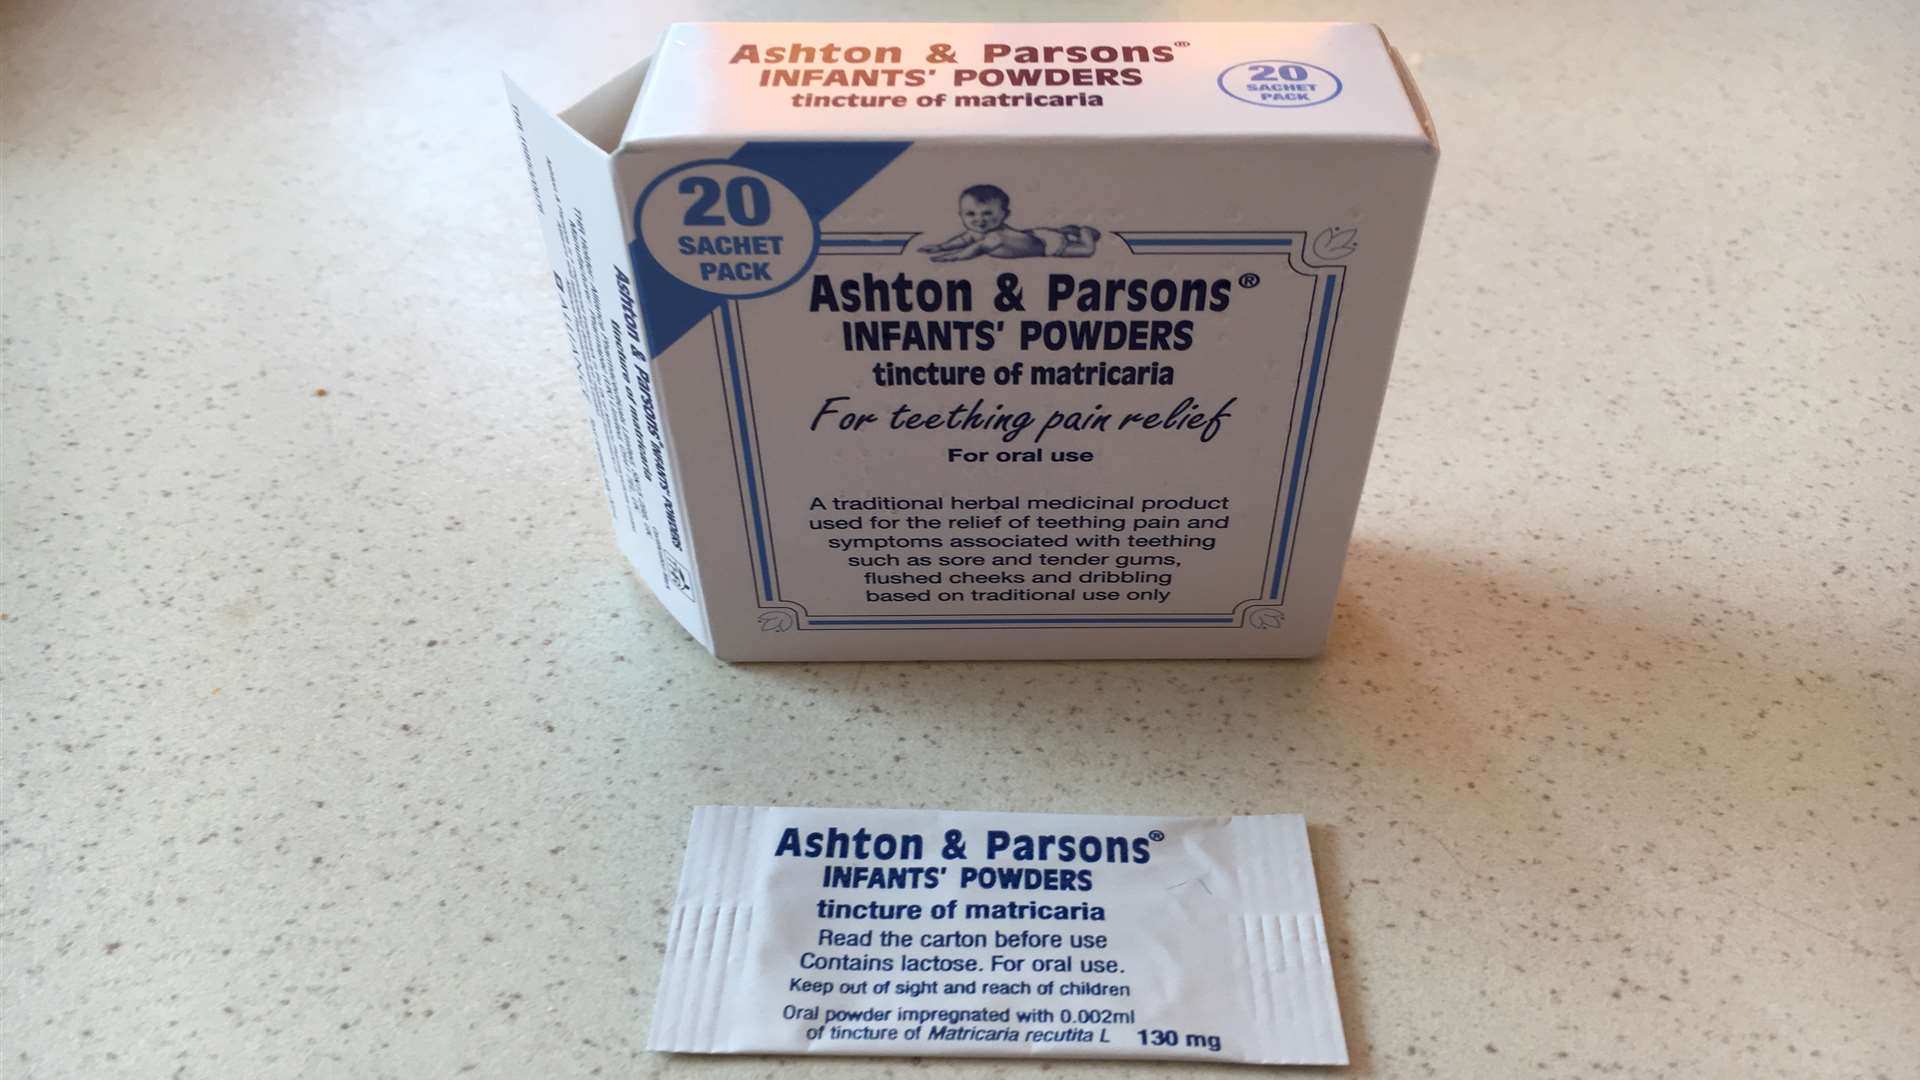 Ashton & Parsons Infants' Powders